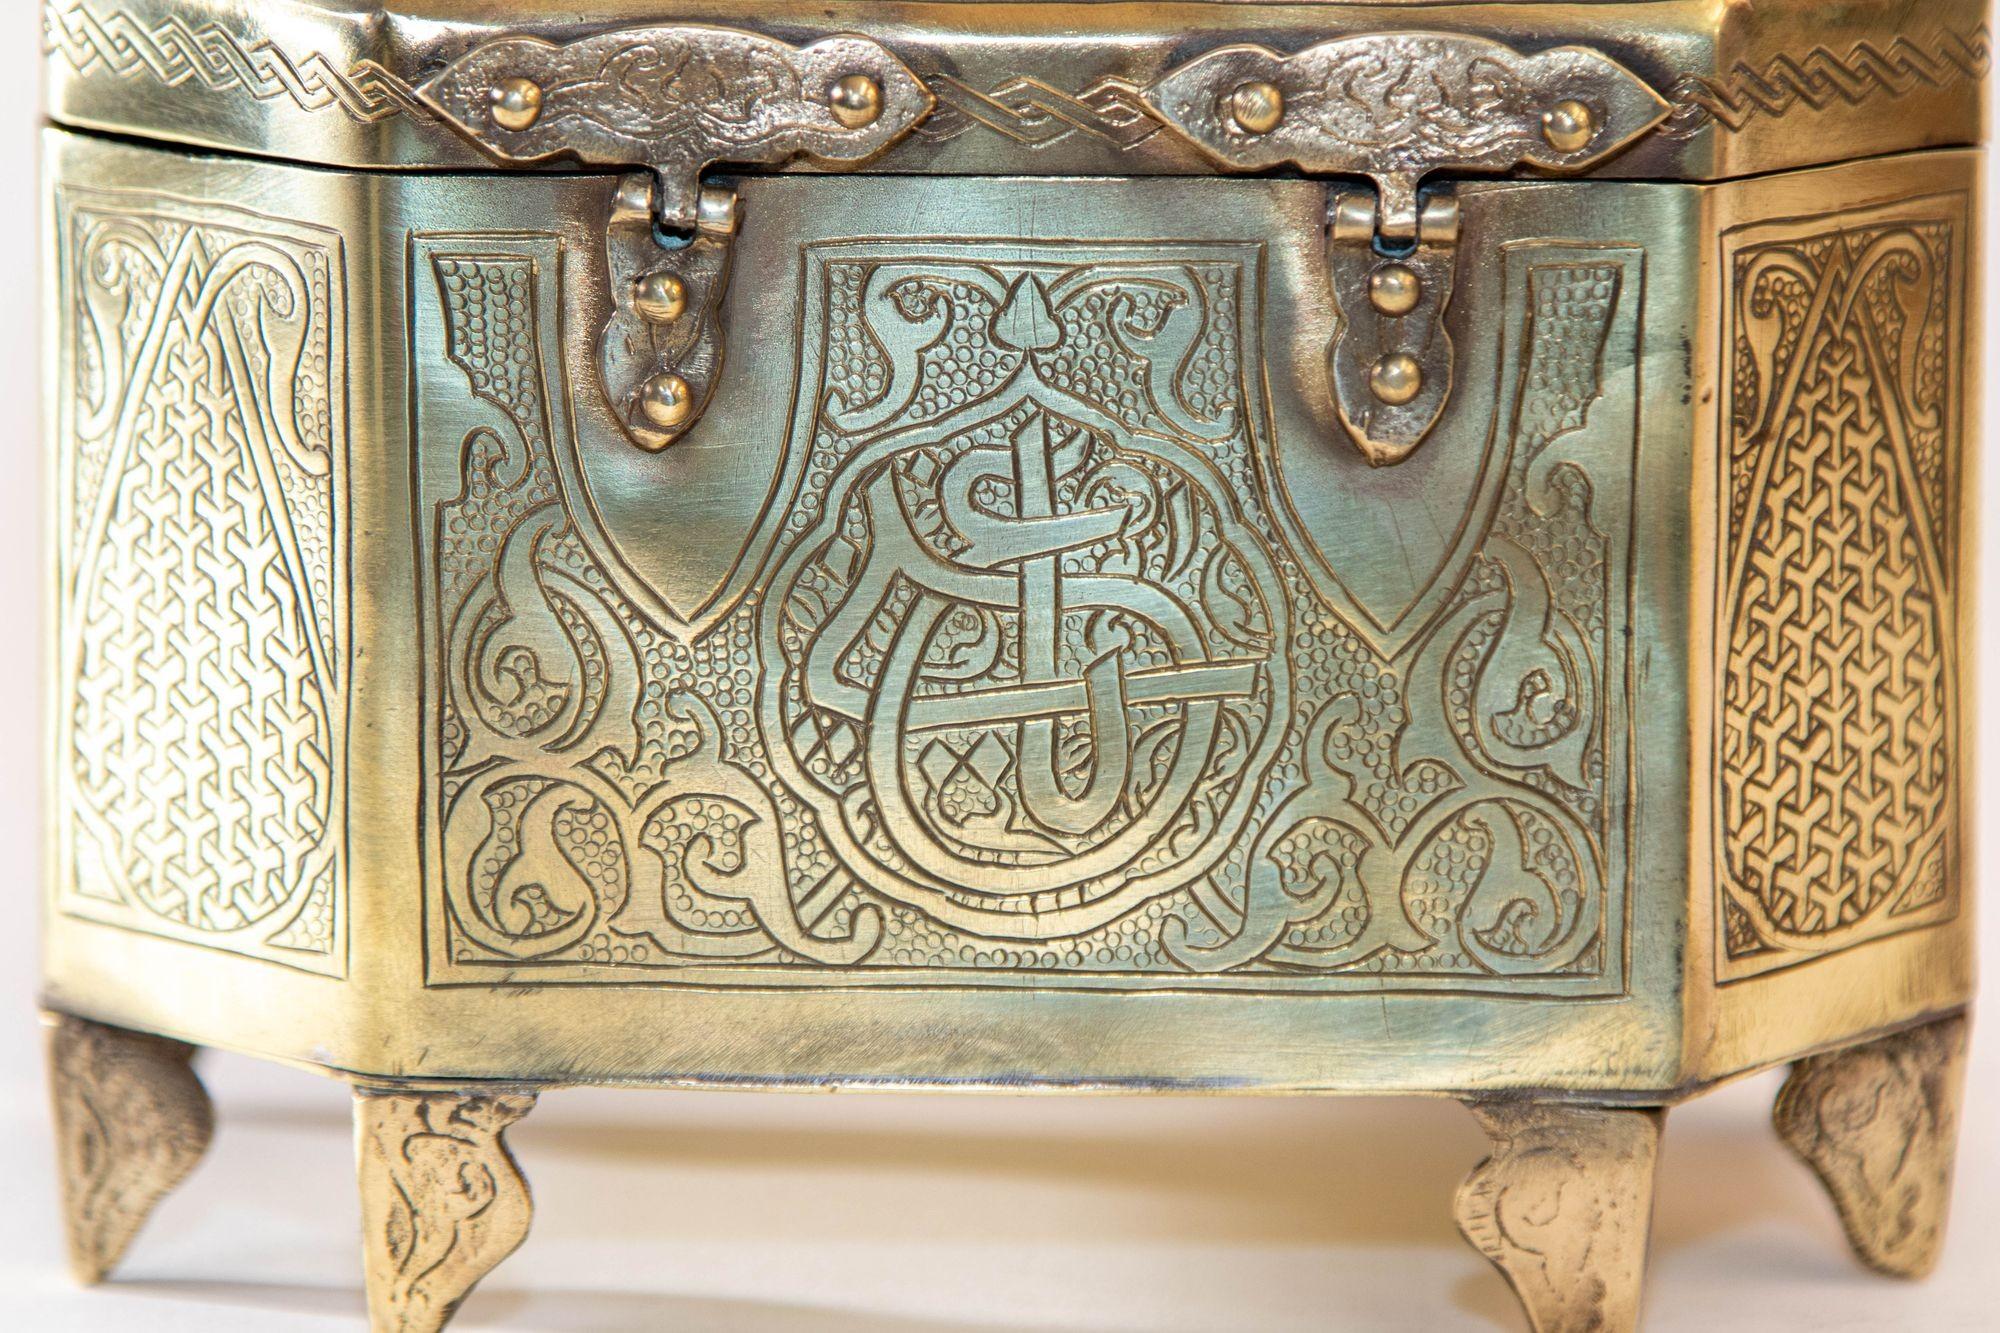 1920 Persian Brass Jewelry Box in Mamluk Revival Damascene Moorish Islamic Style For Sale 5